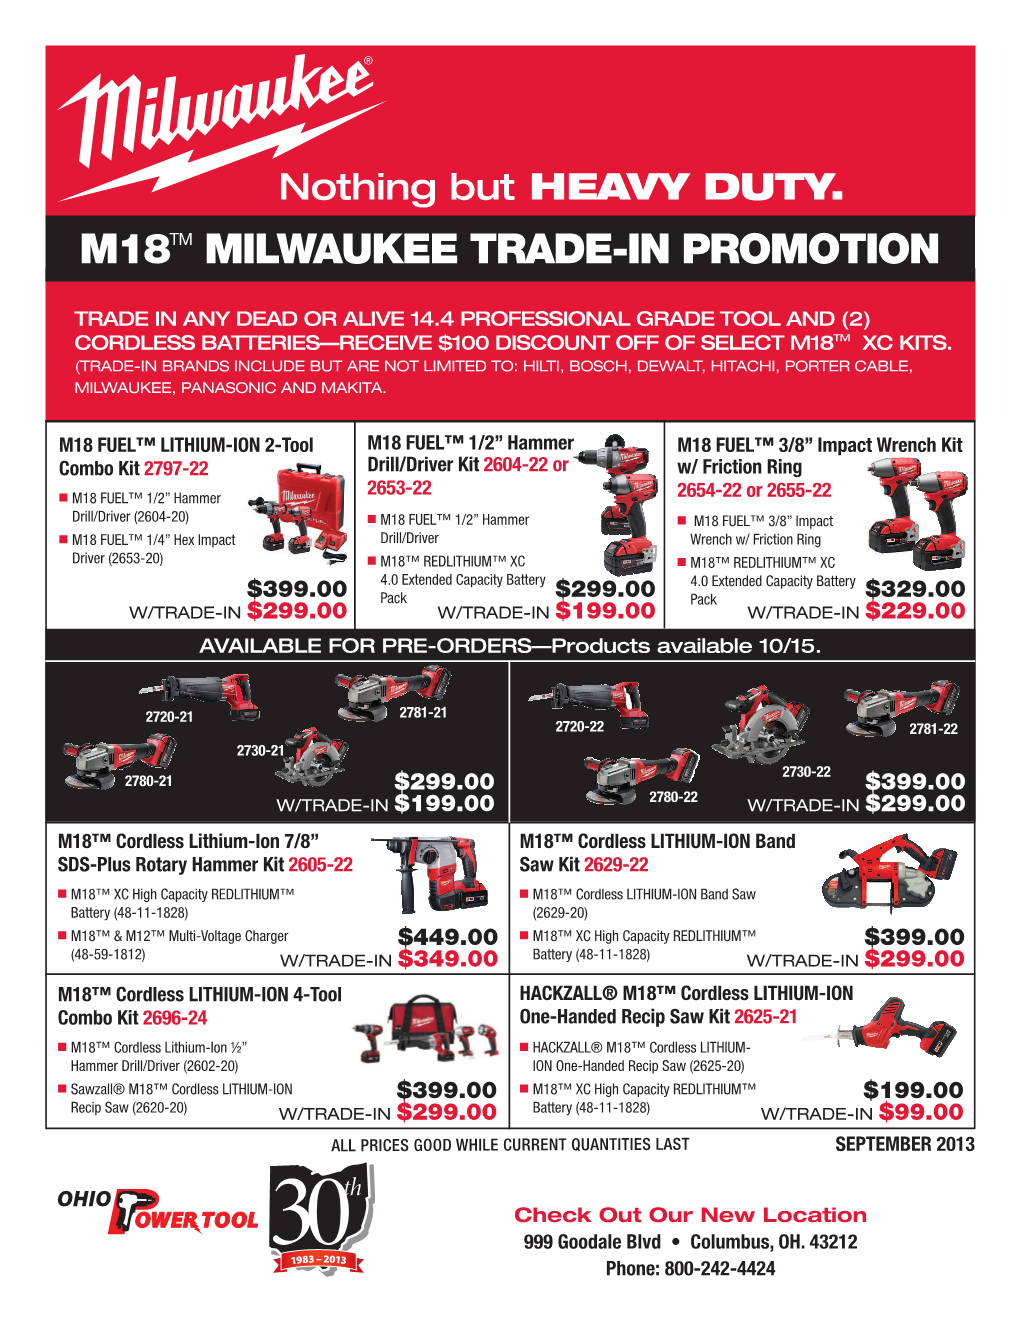 M18tm Milwaukee Trade-In Promotion